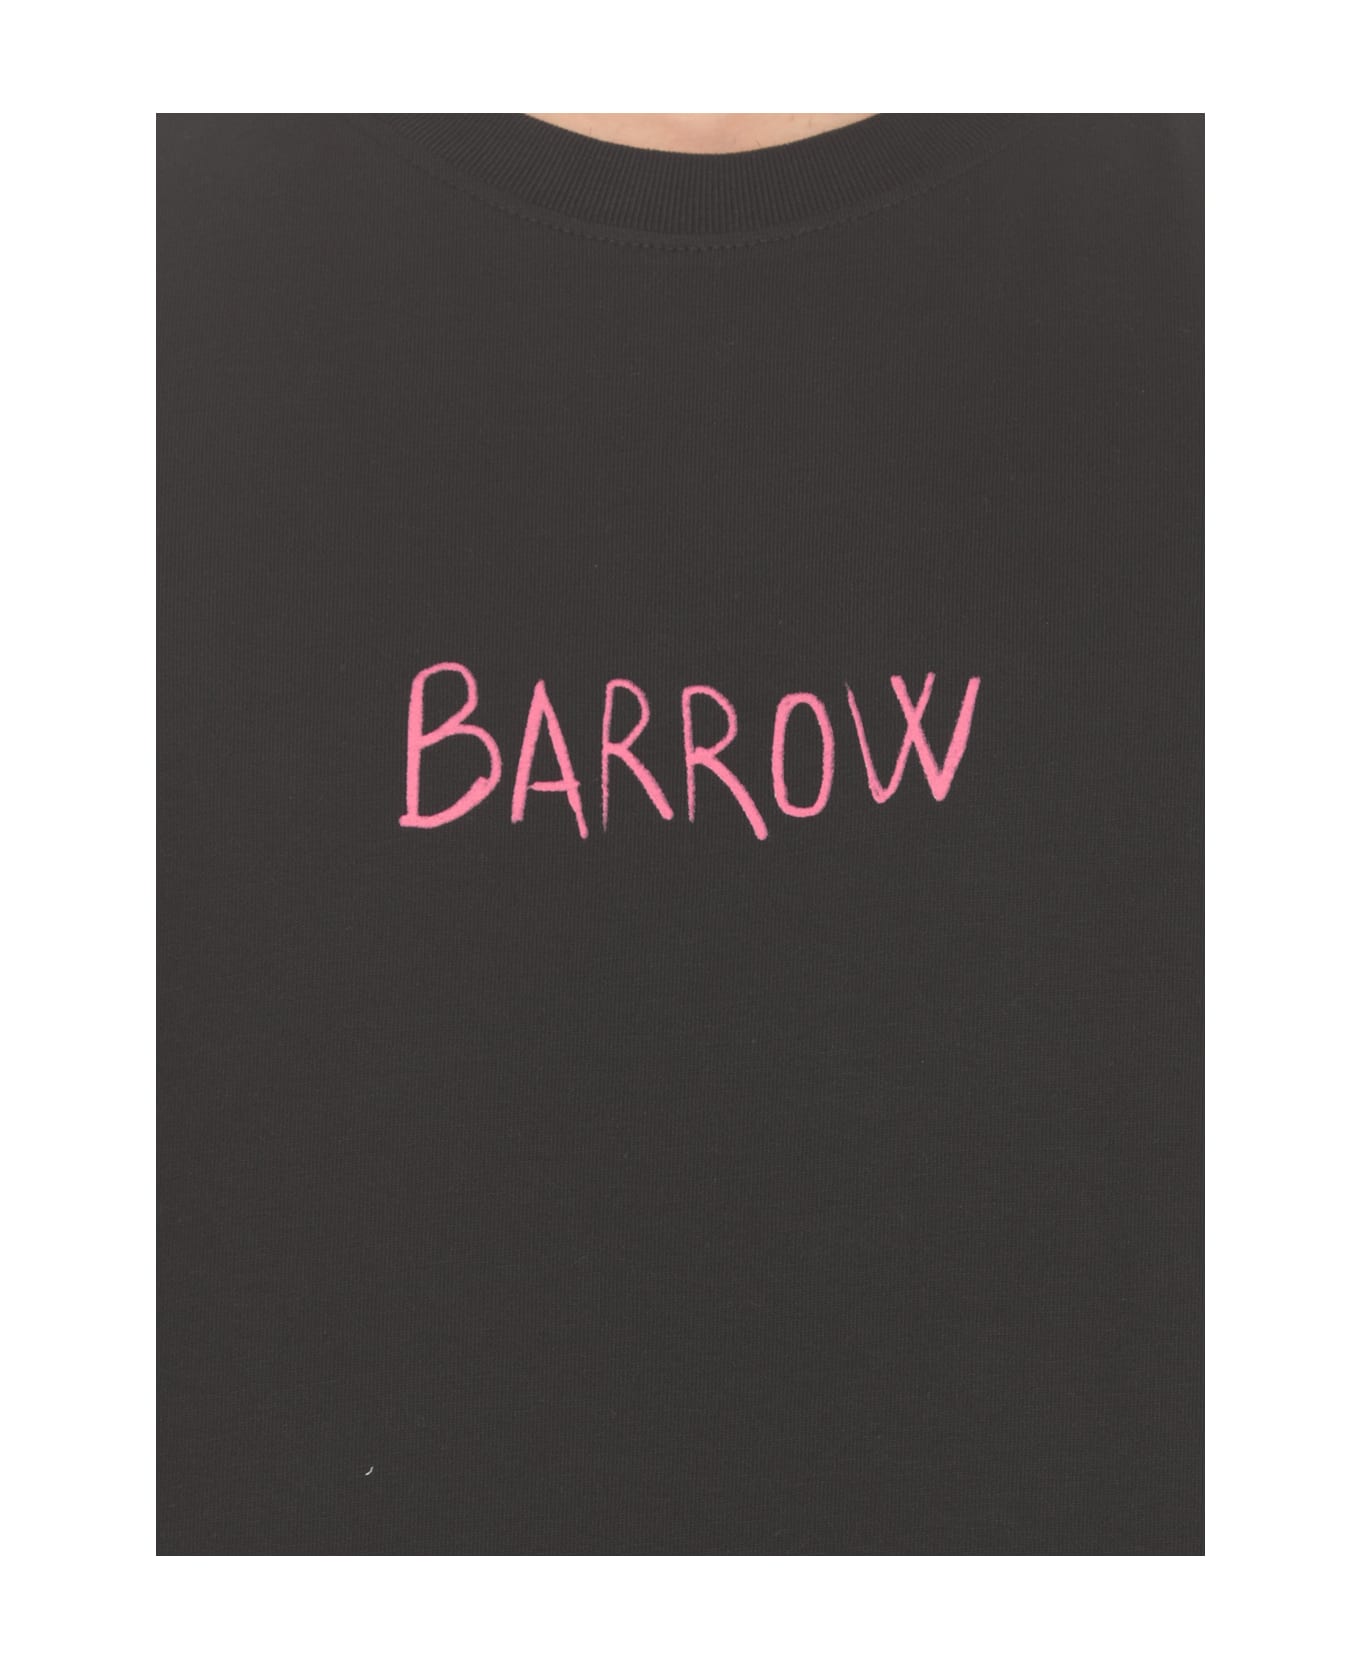 Barrow T-shirt With Logo - Black Tシャツ